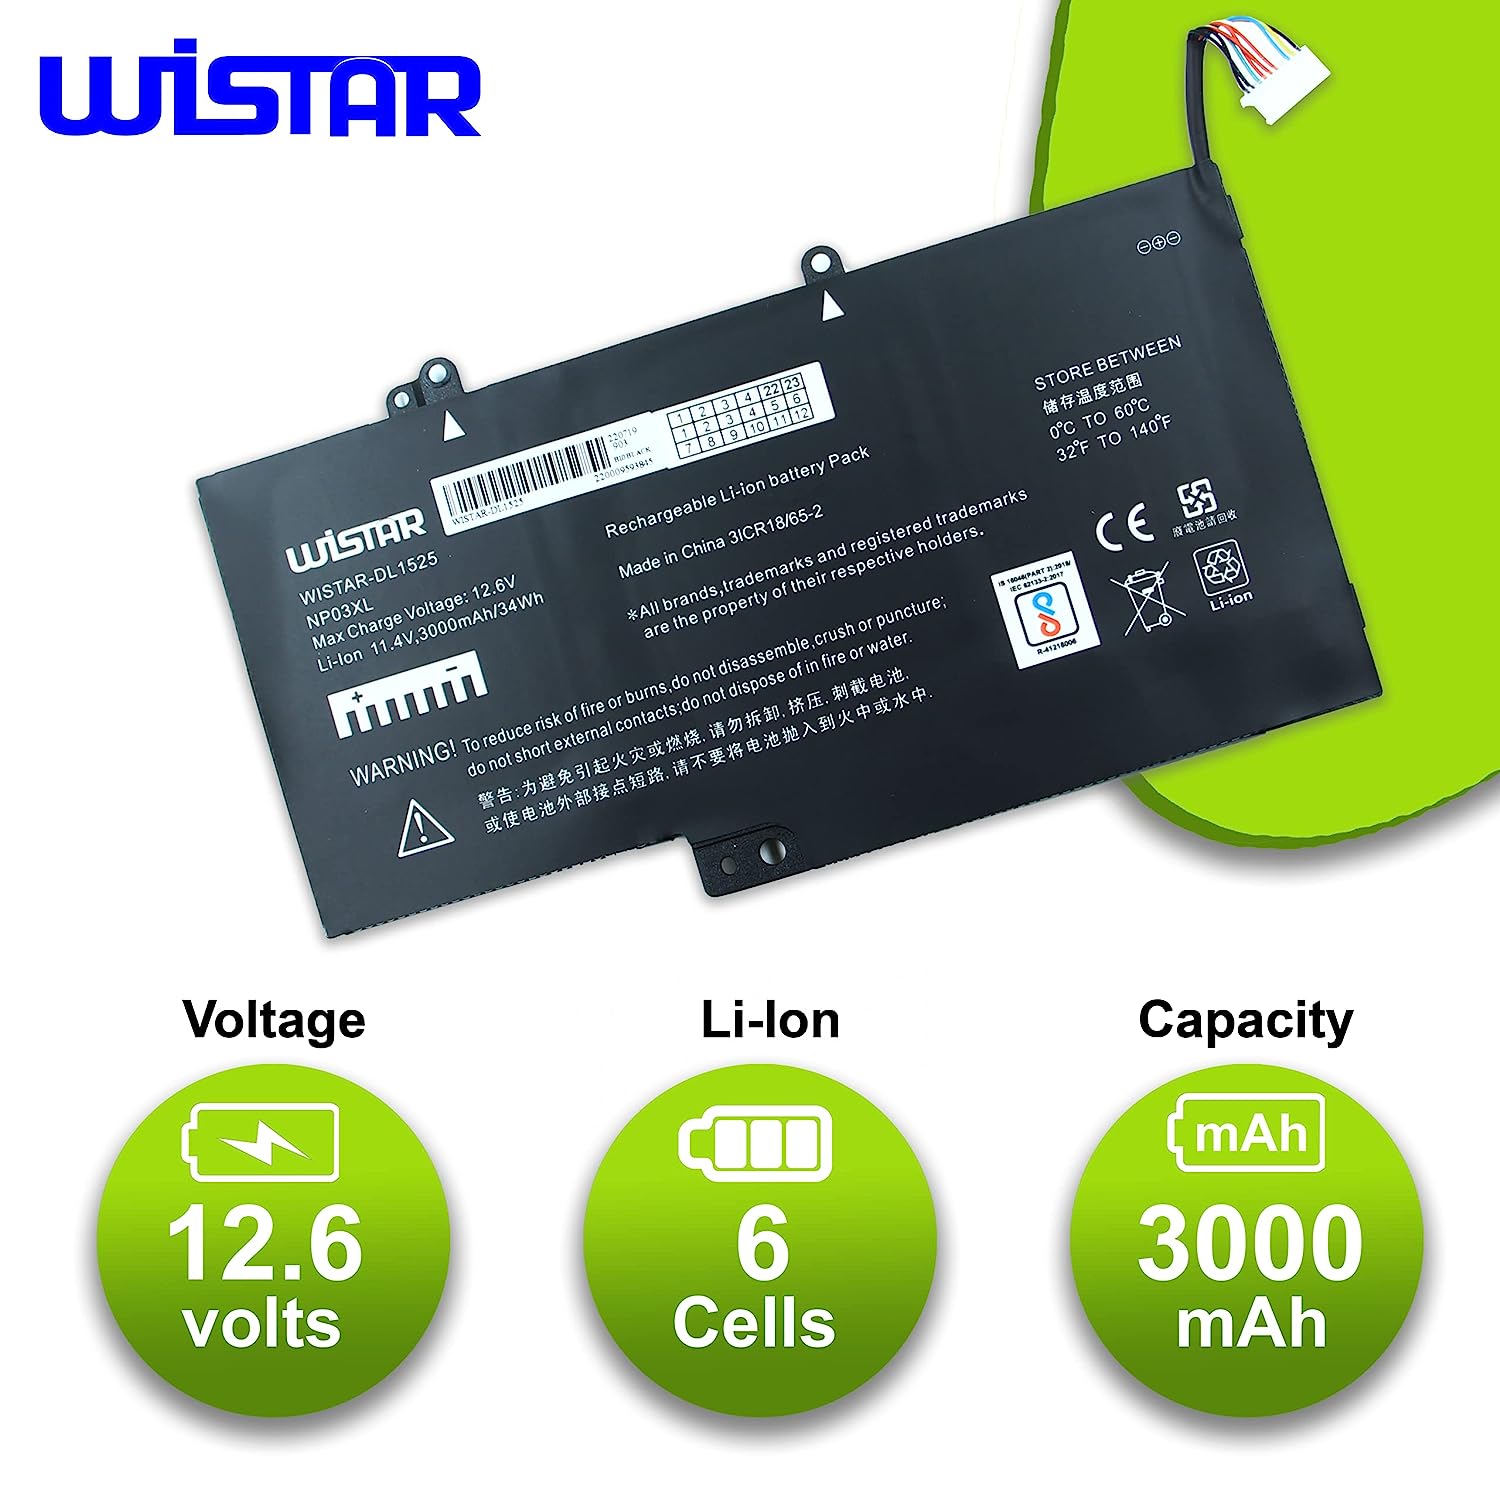 WISTAR NP03XL Notebook Battery for HP Pavilion X360 13-A010DX 13-A110DX 13-A012DX Envy 15-U010DX 15-U337CL HSTNN-LB6L TPN-Q146 TPN-Q147 TPN-Q148 TPN-Q149 760944-421